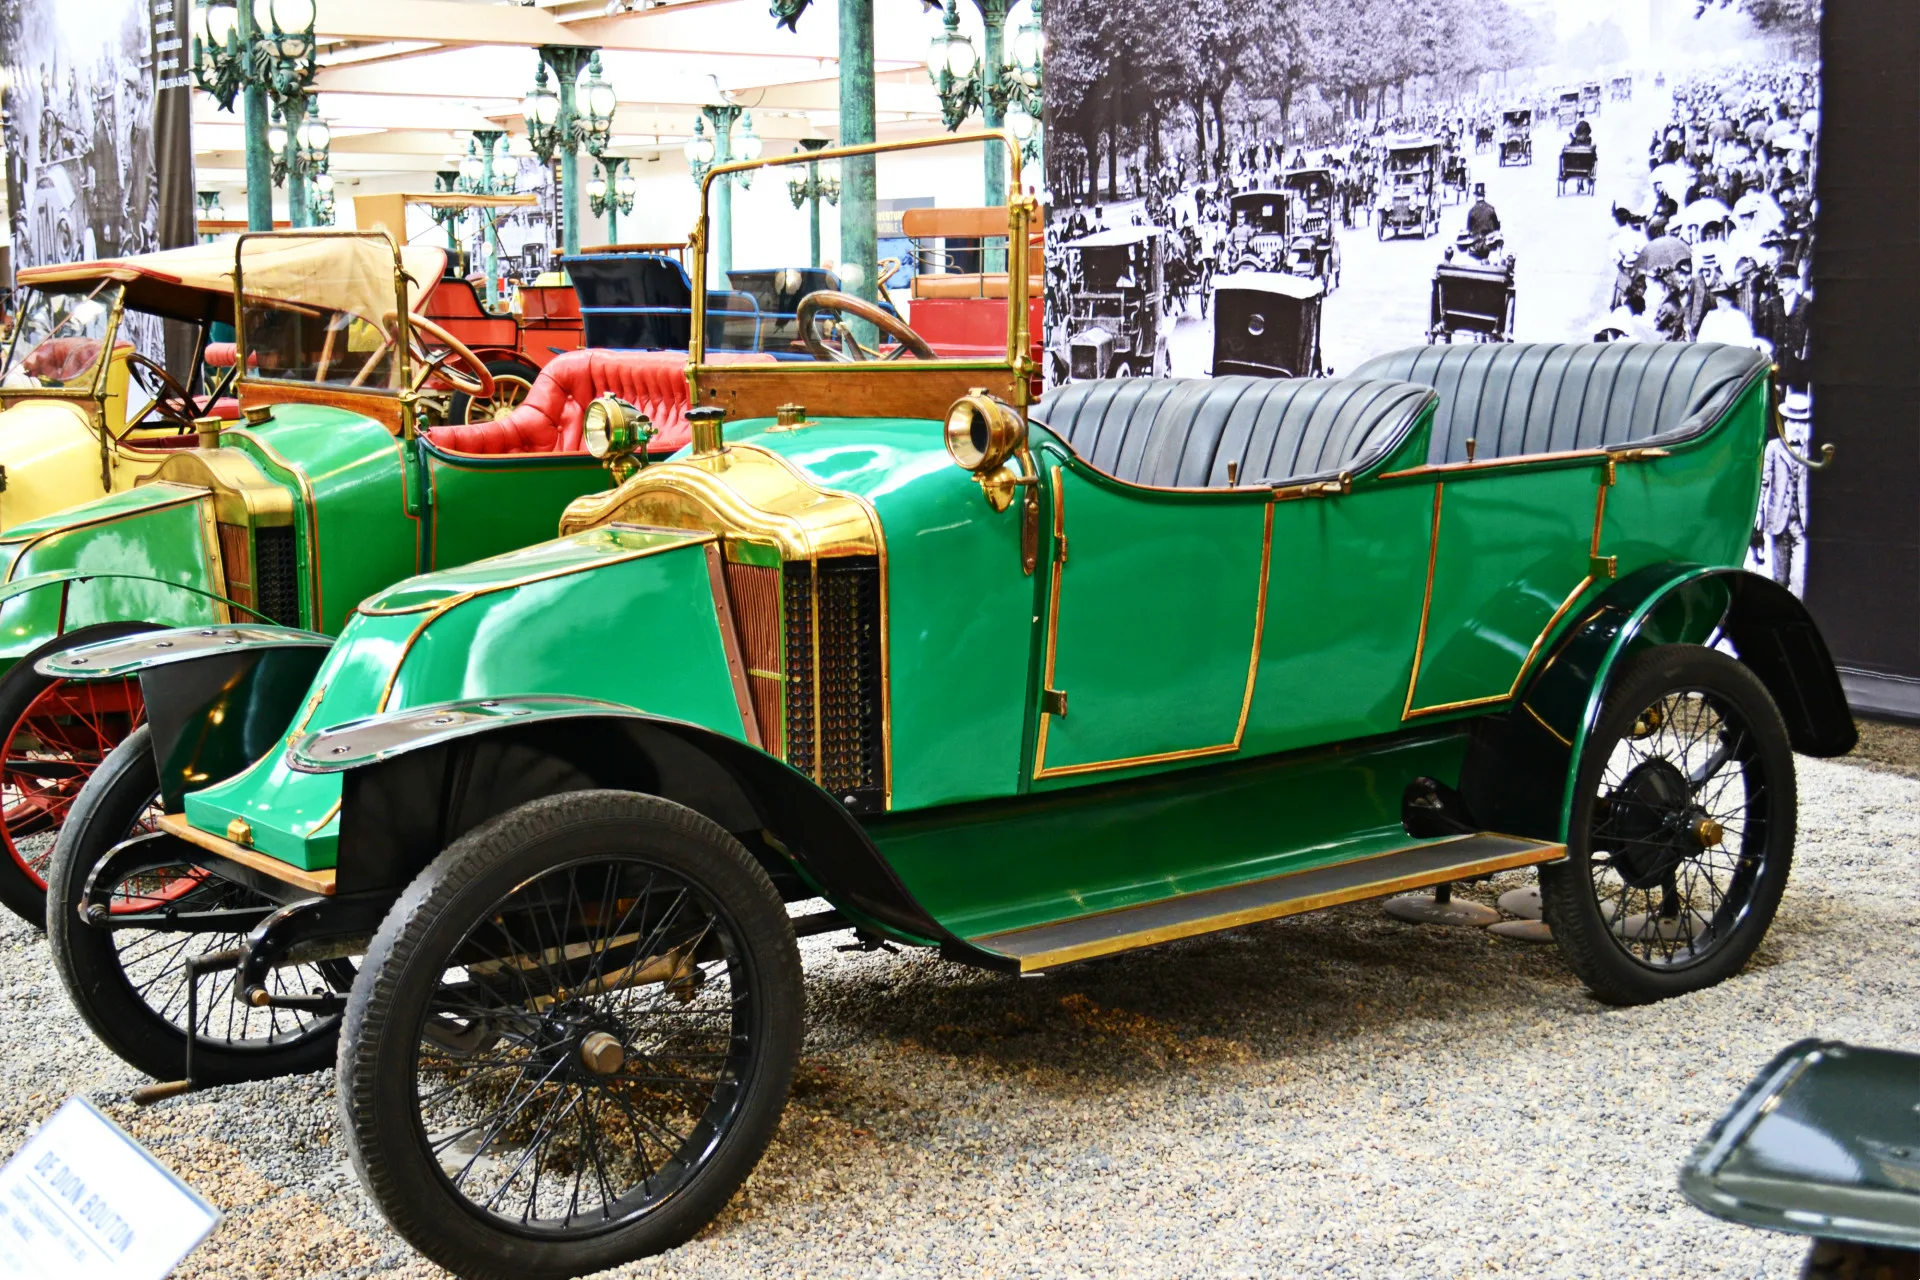 Cite de l’ Automobile, Μουσείο αυτοκινήτου στην Αλσατία 187